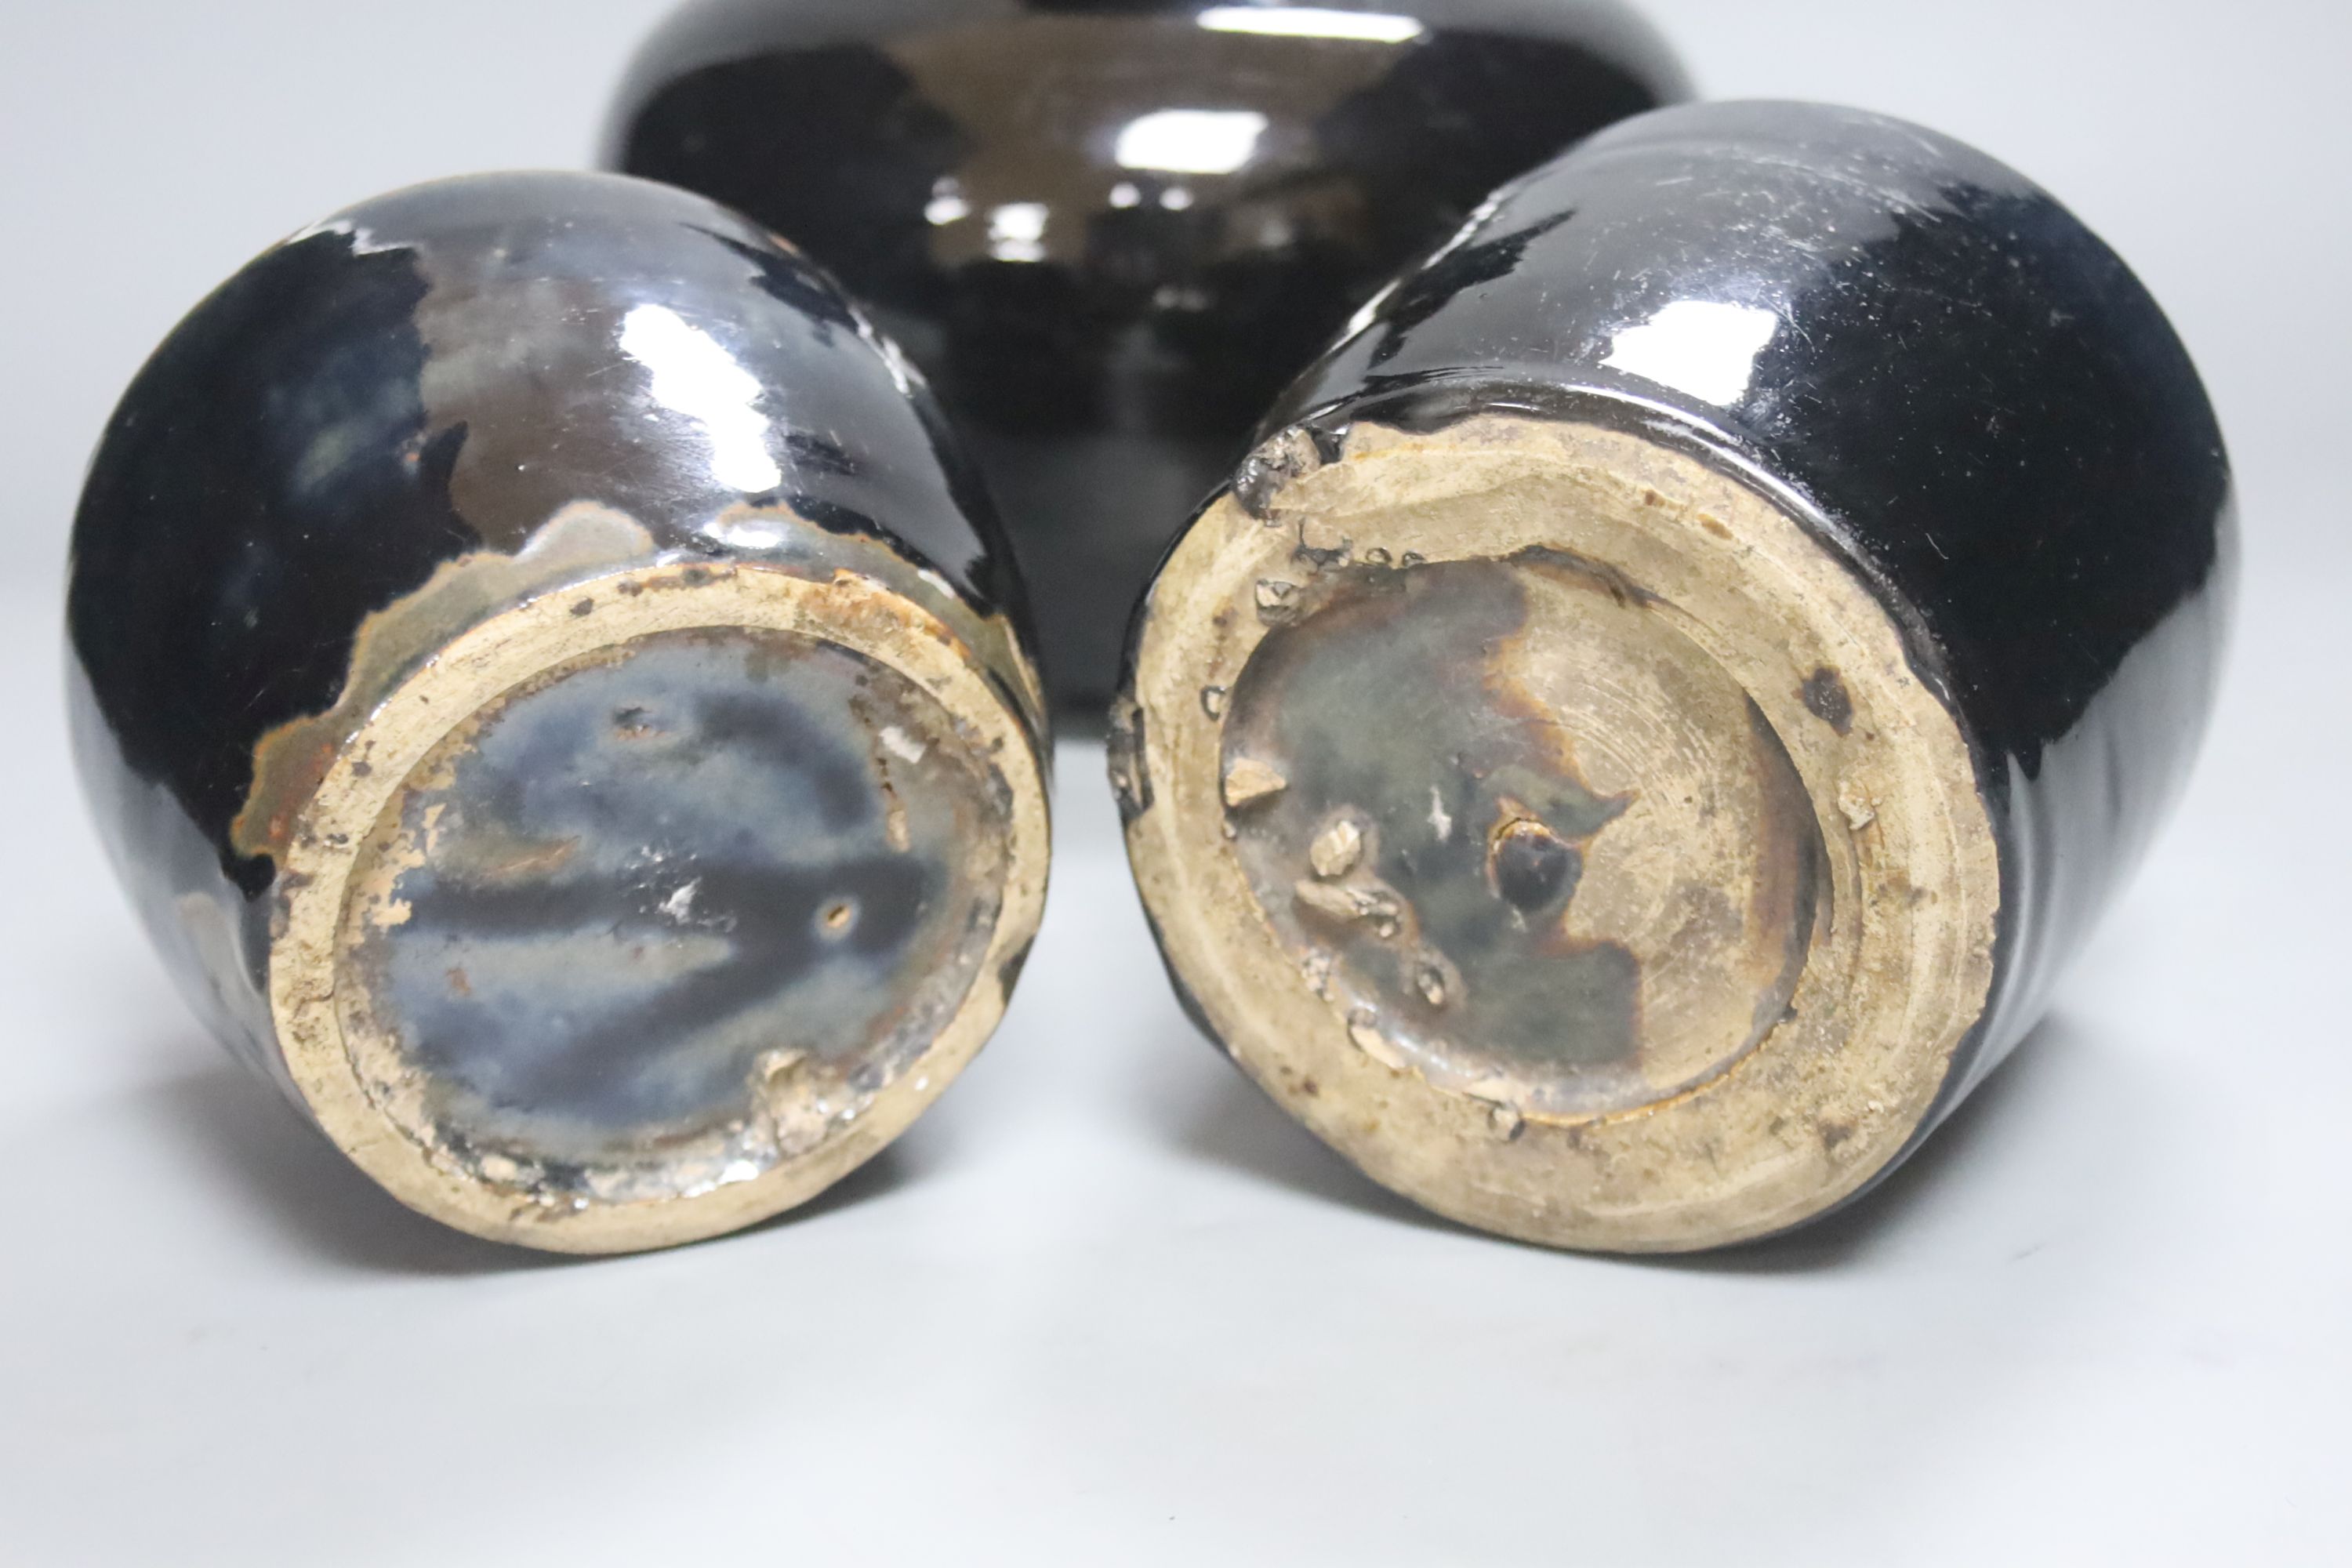 Three Chinese Shanxi black glazed jars, Qing dynasty, height 12 - 20cm